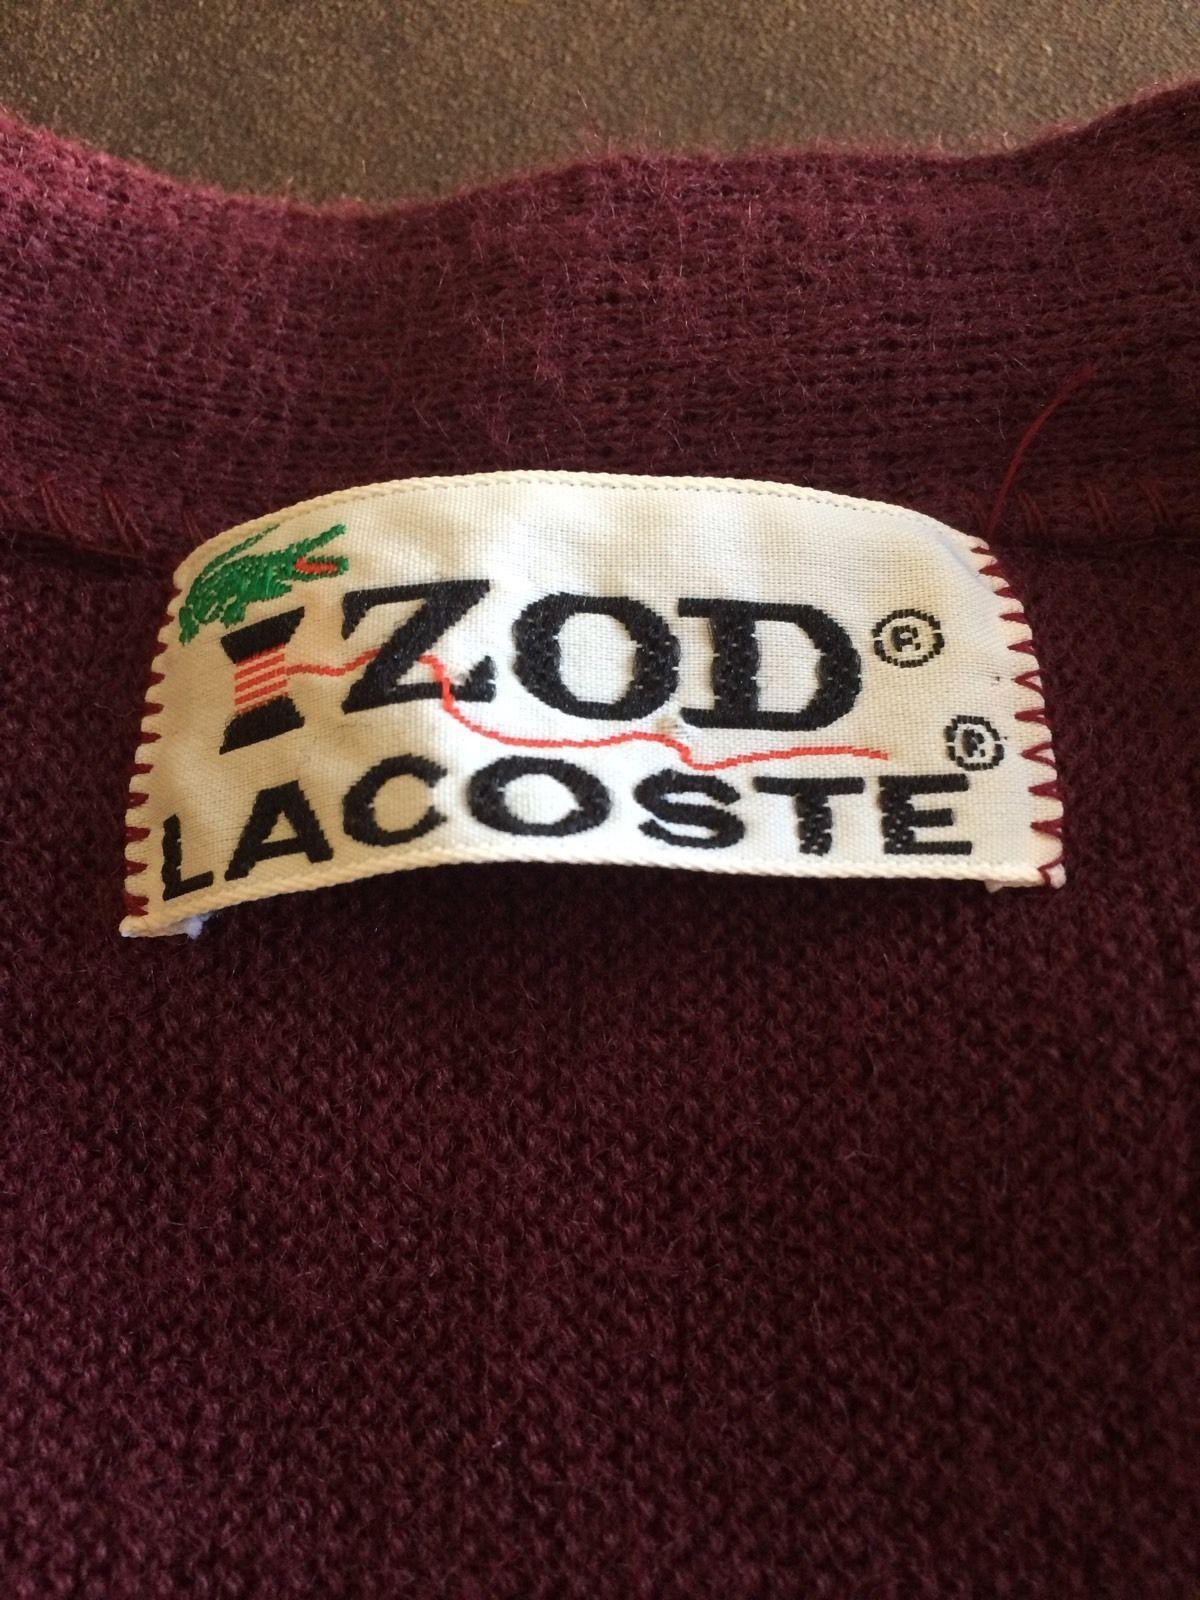 Izod Lacoste Logo